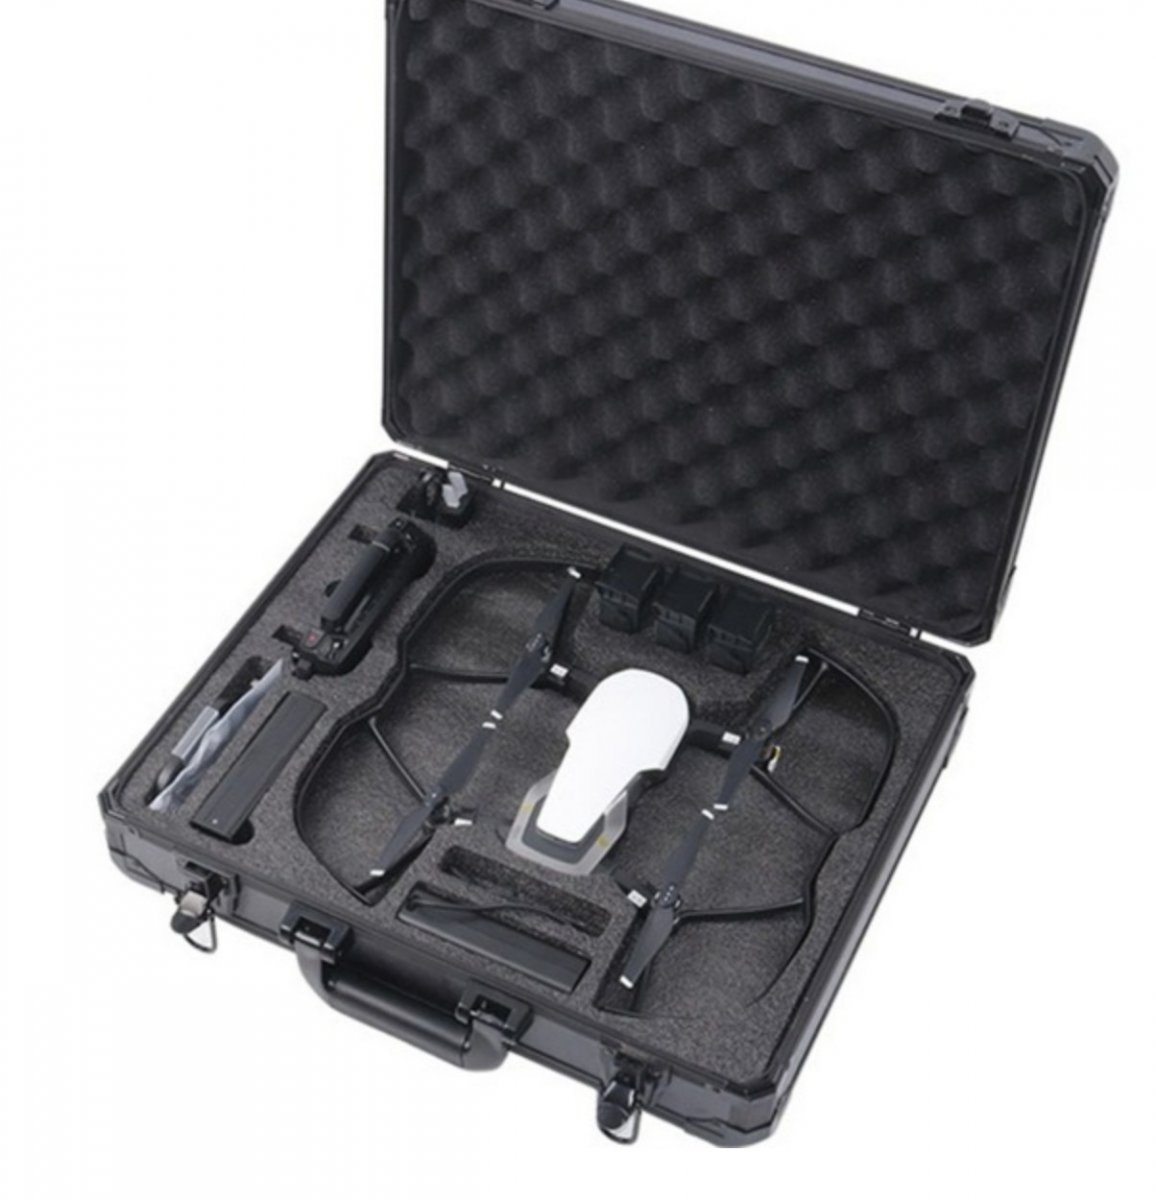 DJI Mavic Air alu ochranný kufr s výplní  s dronem